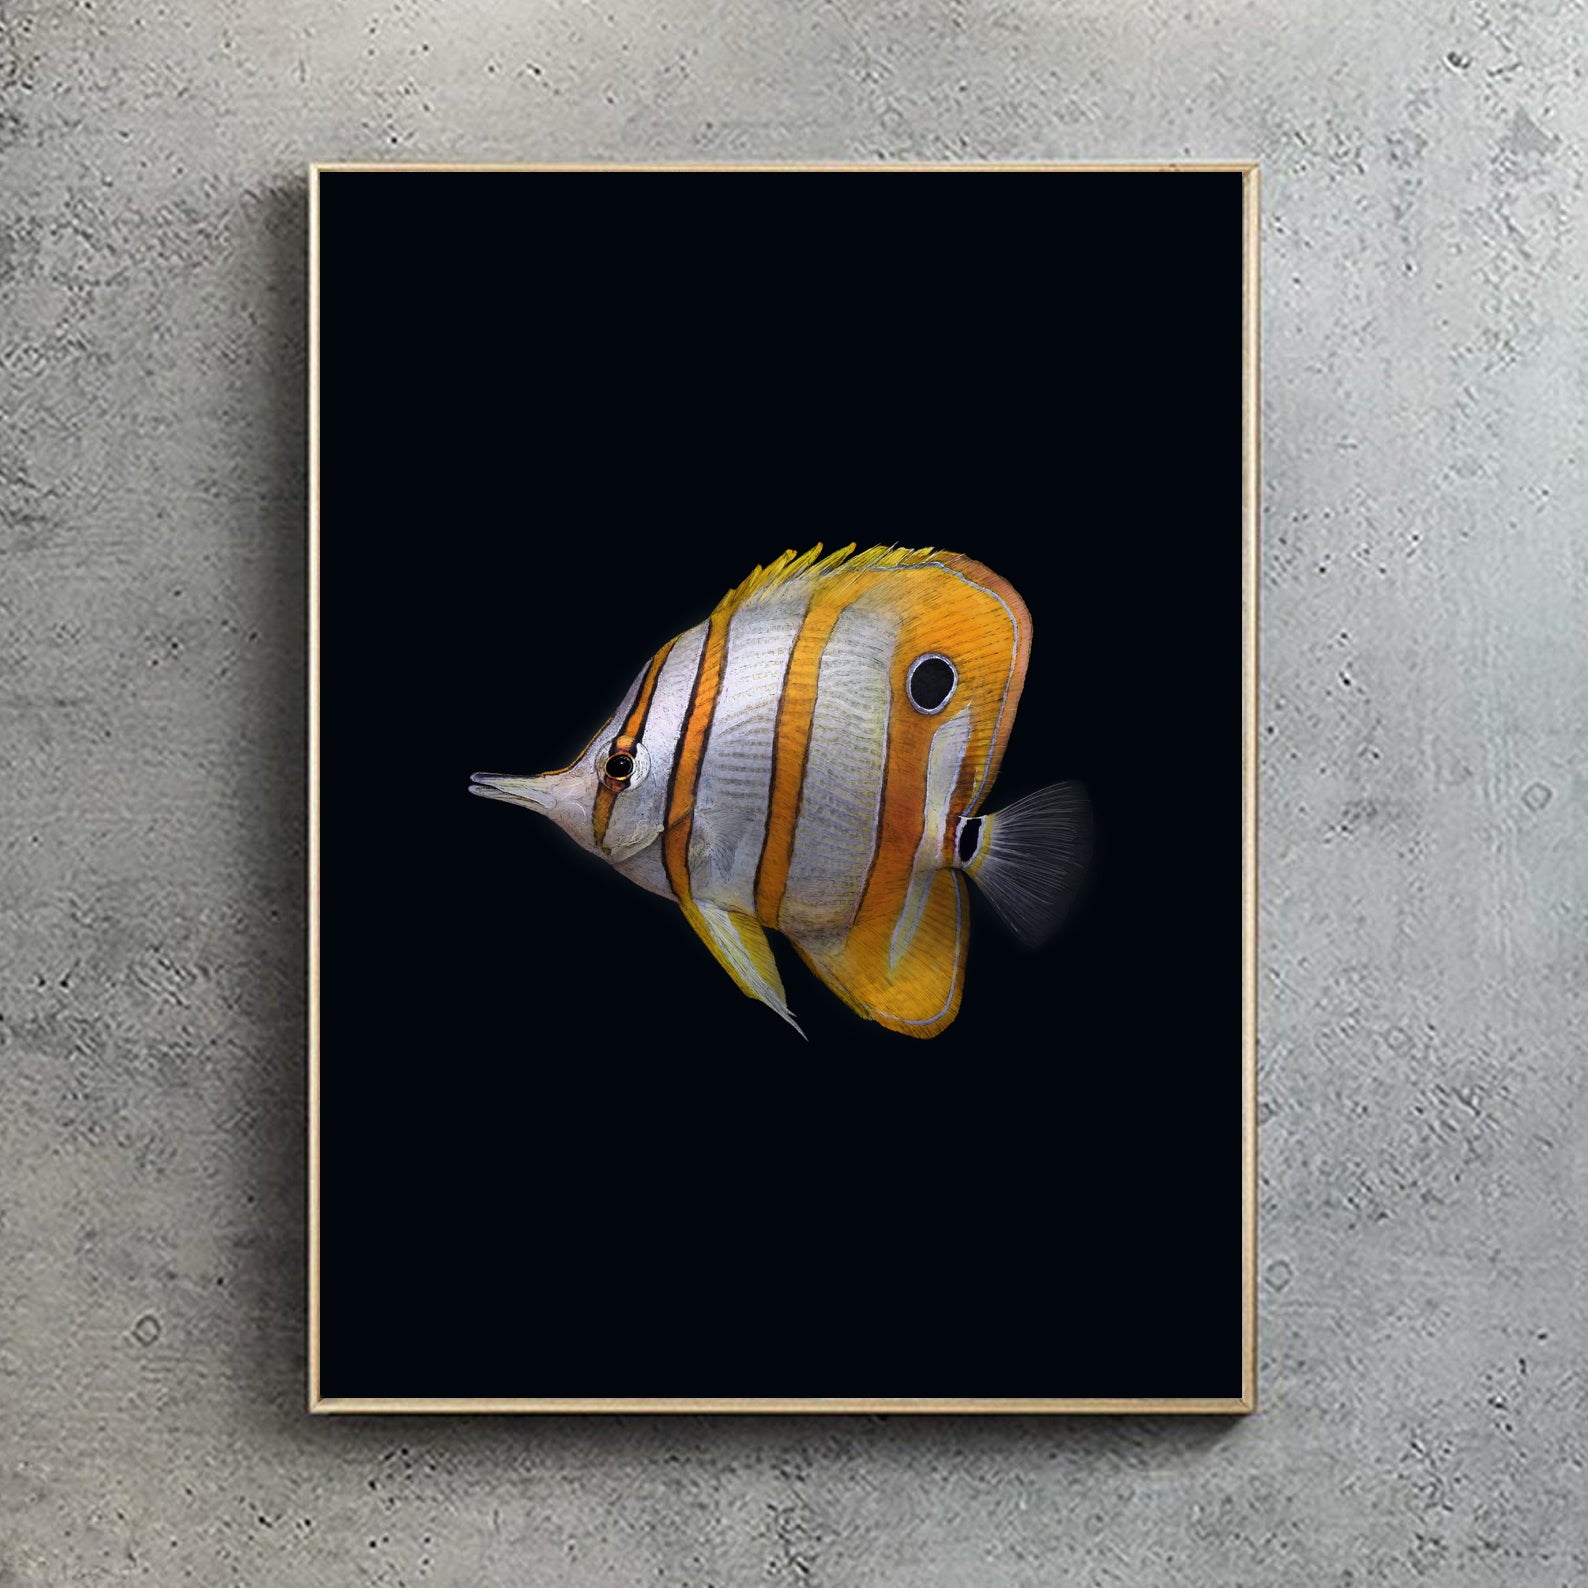 Copperband Butterflyfish, Black edition